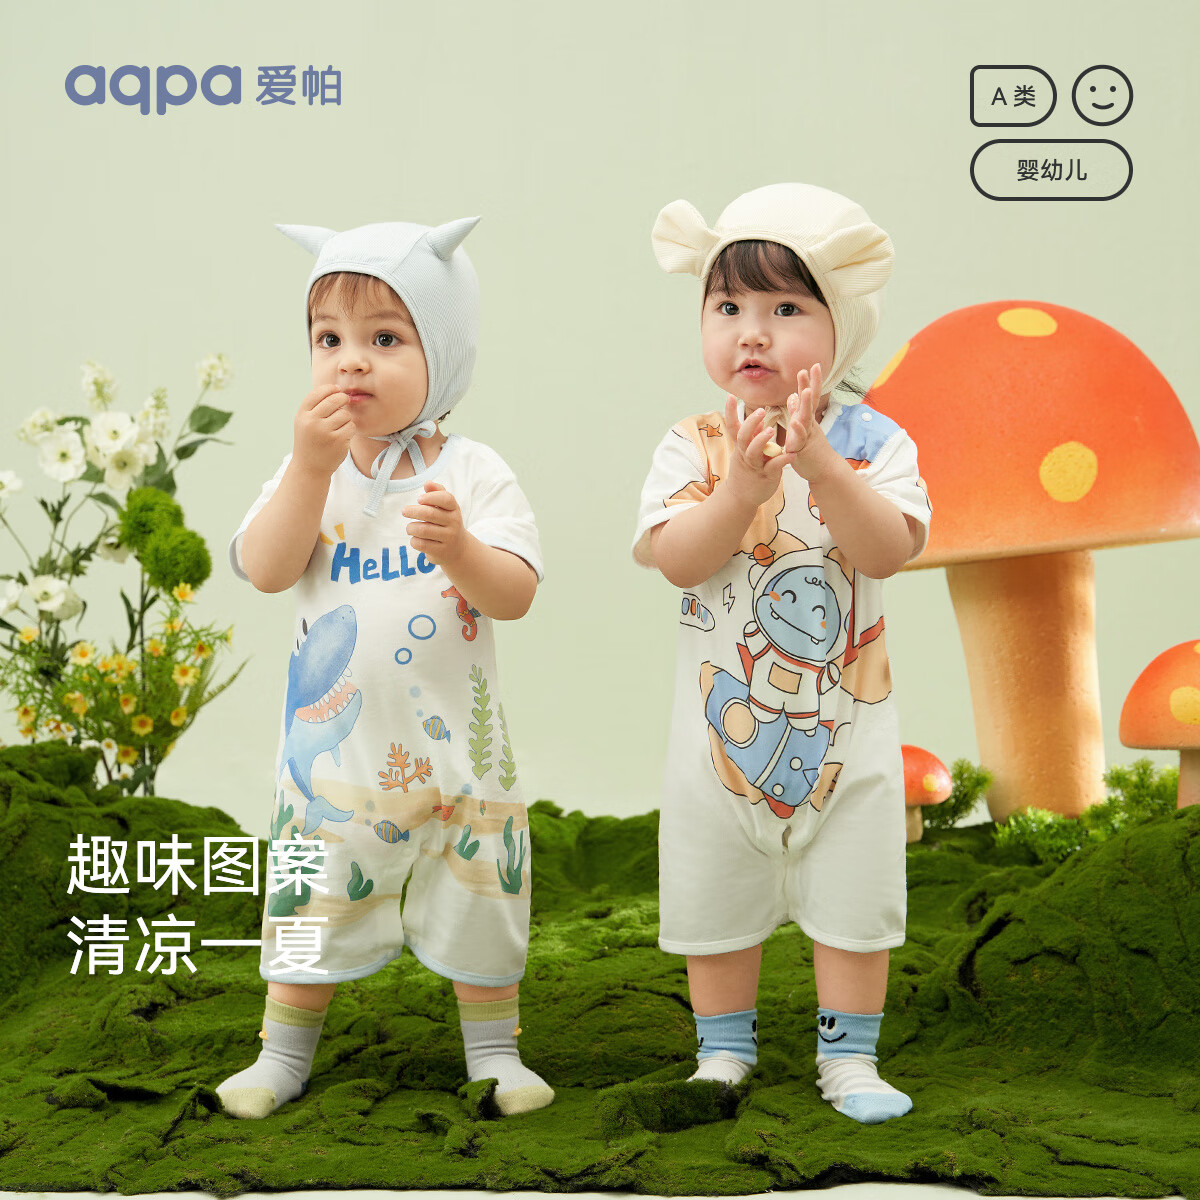 aqpa【135g新疆棉】婴儿纯棉连体衣婴幼儿爬服夏季新生宝